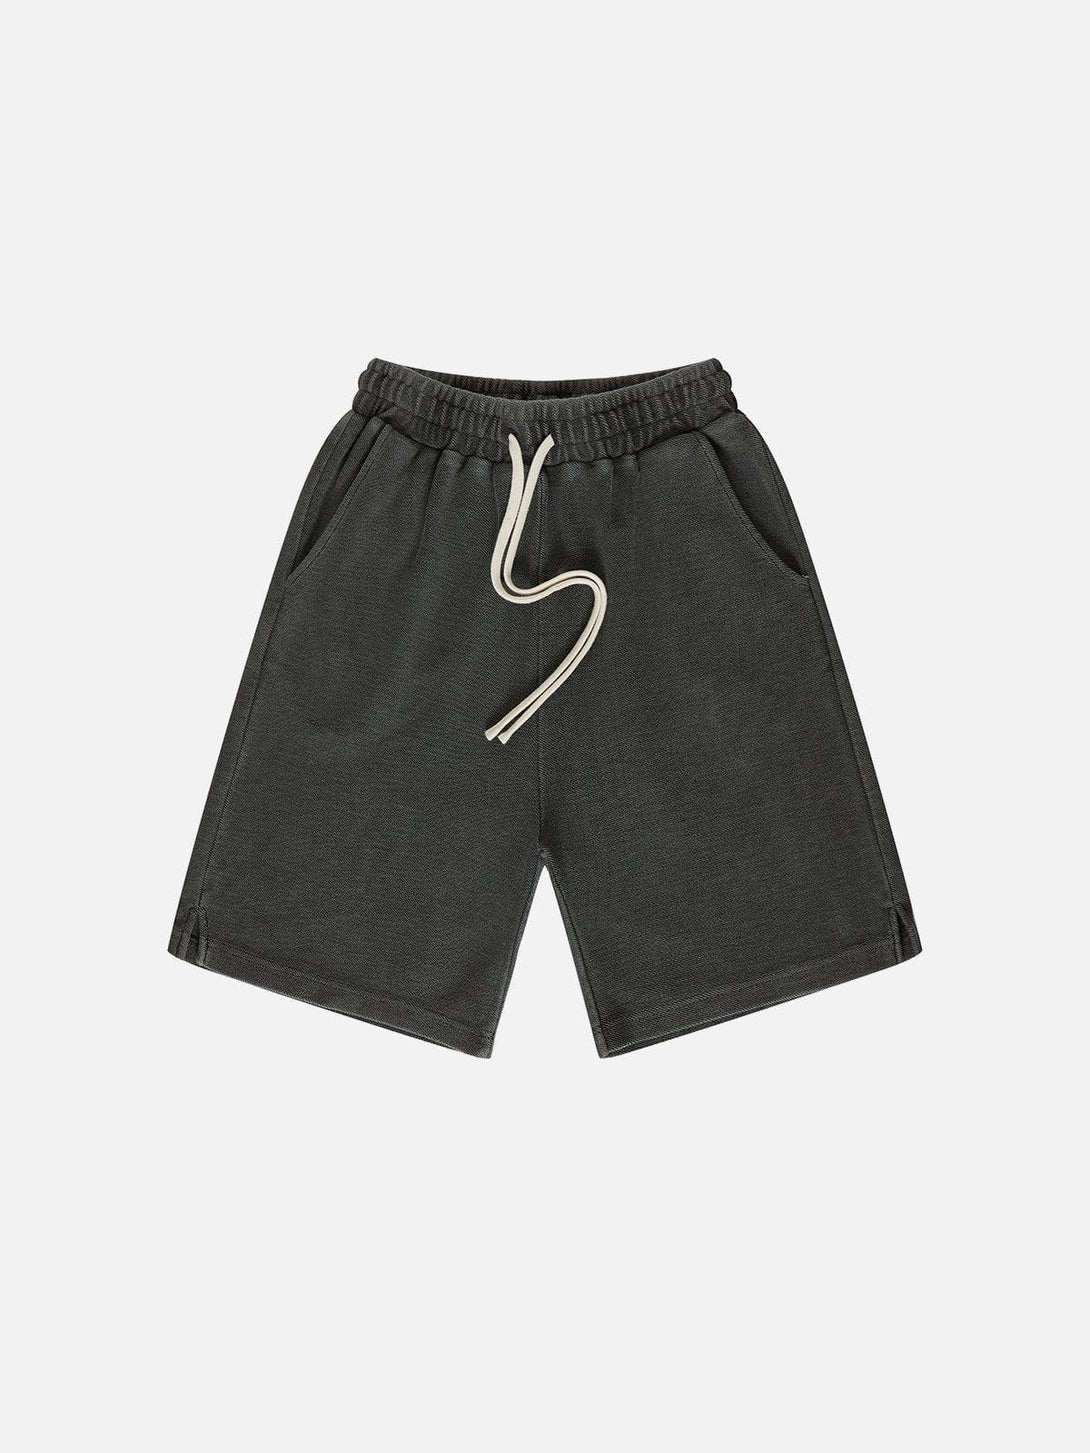 Levefly - Solid Washed Shorts - Streetwear Fashion - levefly.com